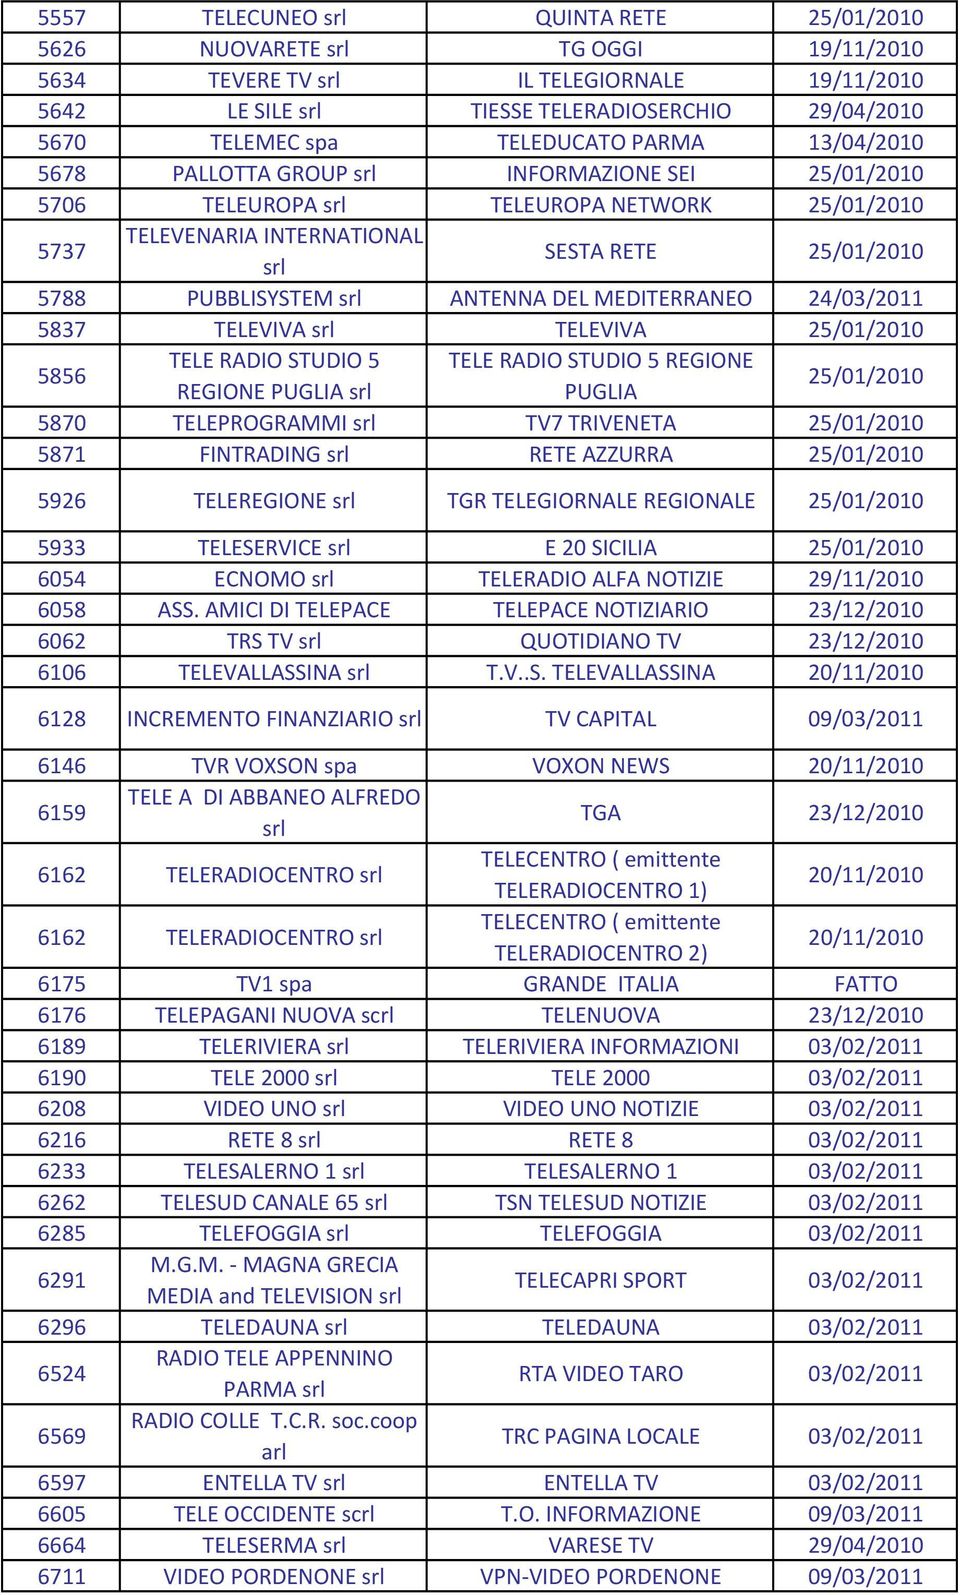 24/03/2011 5837 TELEVIVA TELEVIVA 25/01/2010 5856 TELE RADIO STUDIO 5 TELE RADIO STUDIO 5 REGIONE REGIONE PUGLIA PUGLIA 25/01/2010 5870 TELEPROGRAMMI TV7 TRIVENETA 25/01/2010 5871 FINTRADING RETE